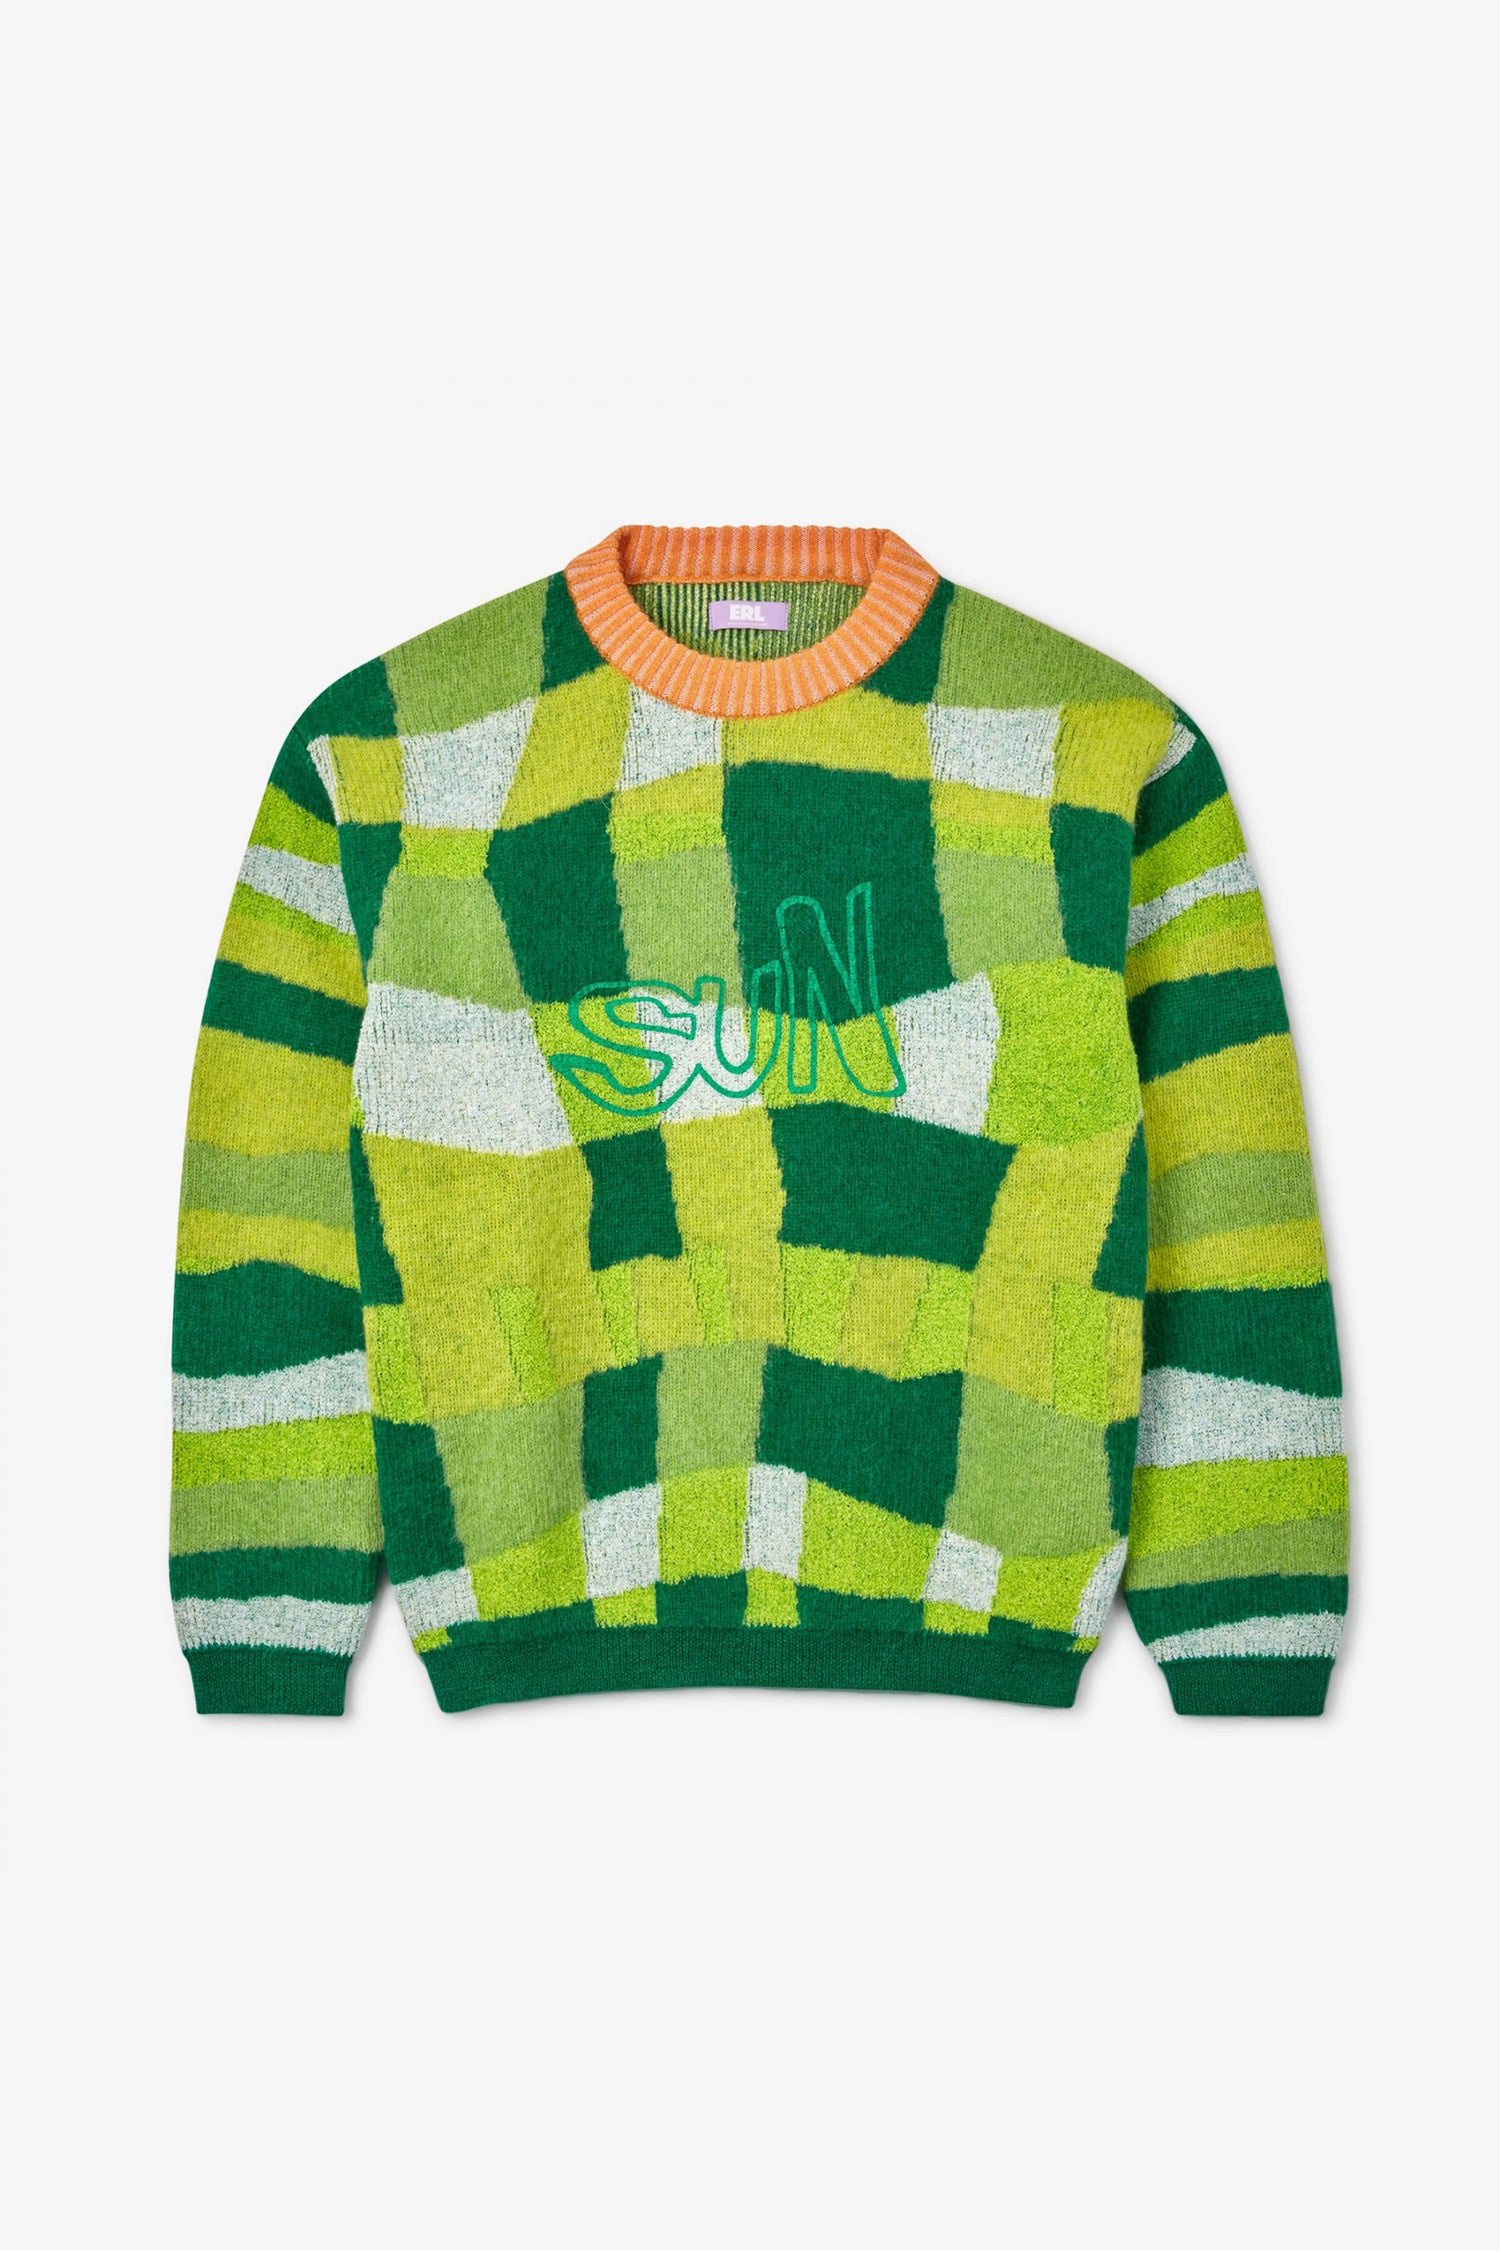 Selectshop FRAME - ERL SUN Sweater Sweats-knits Dubai